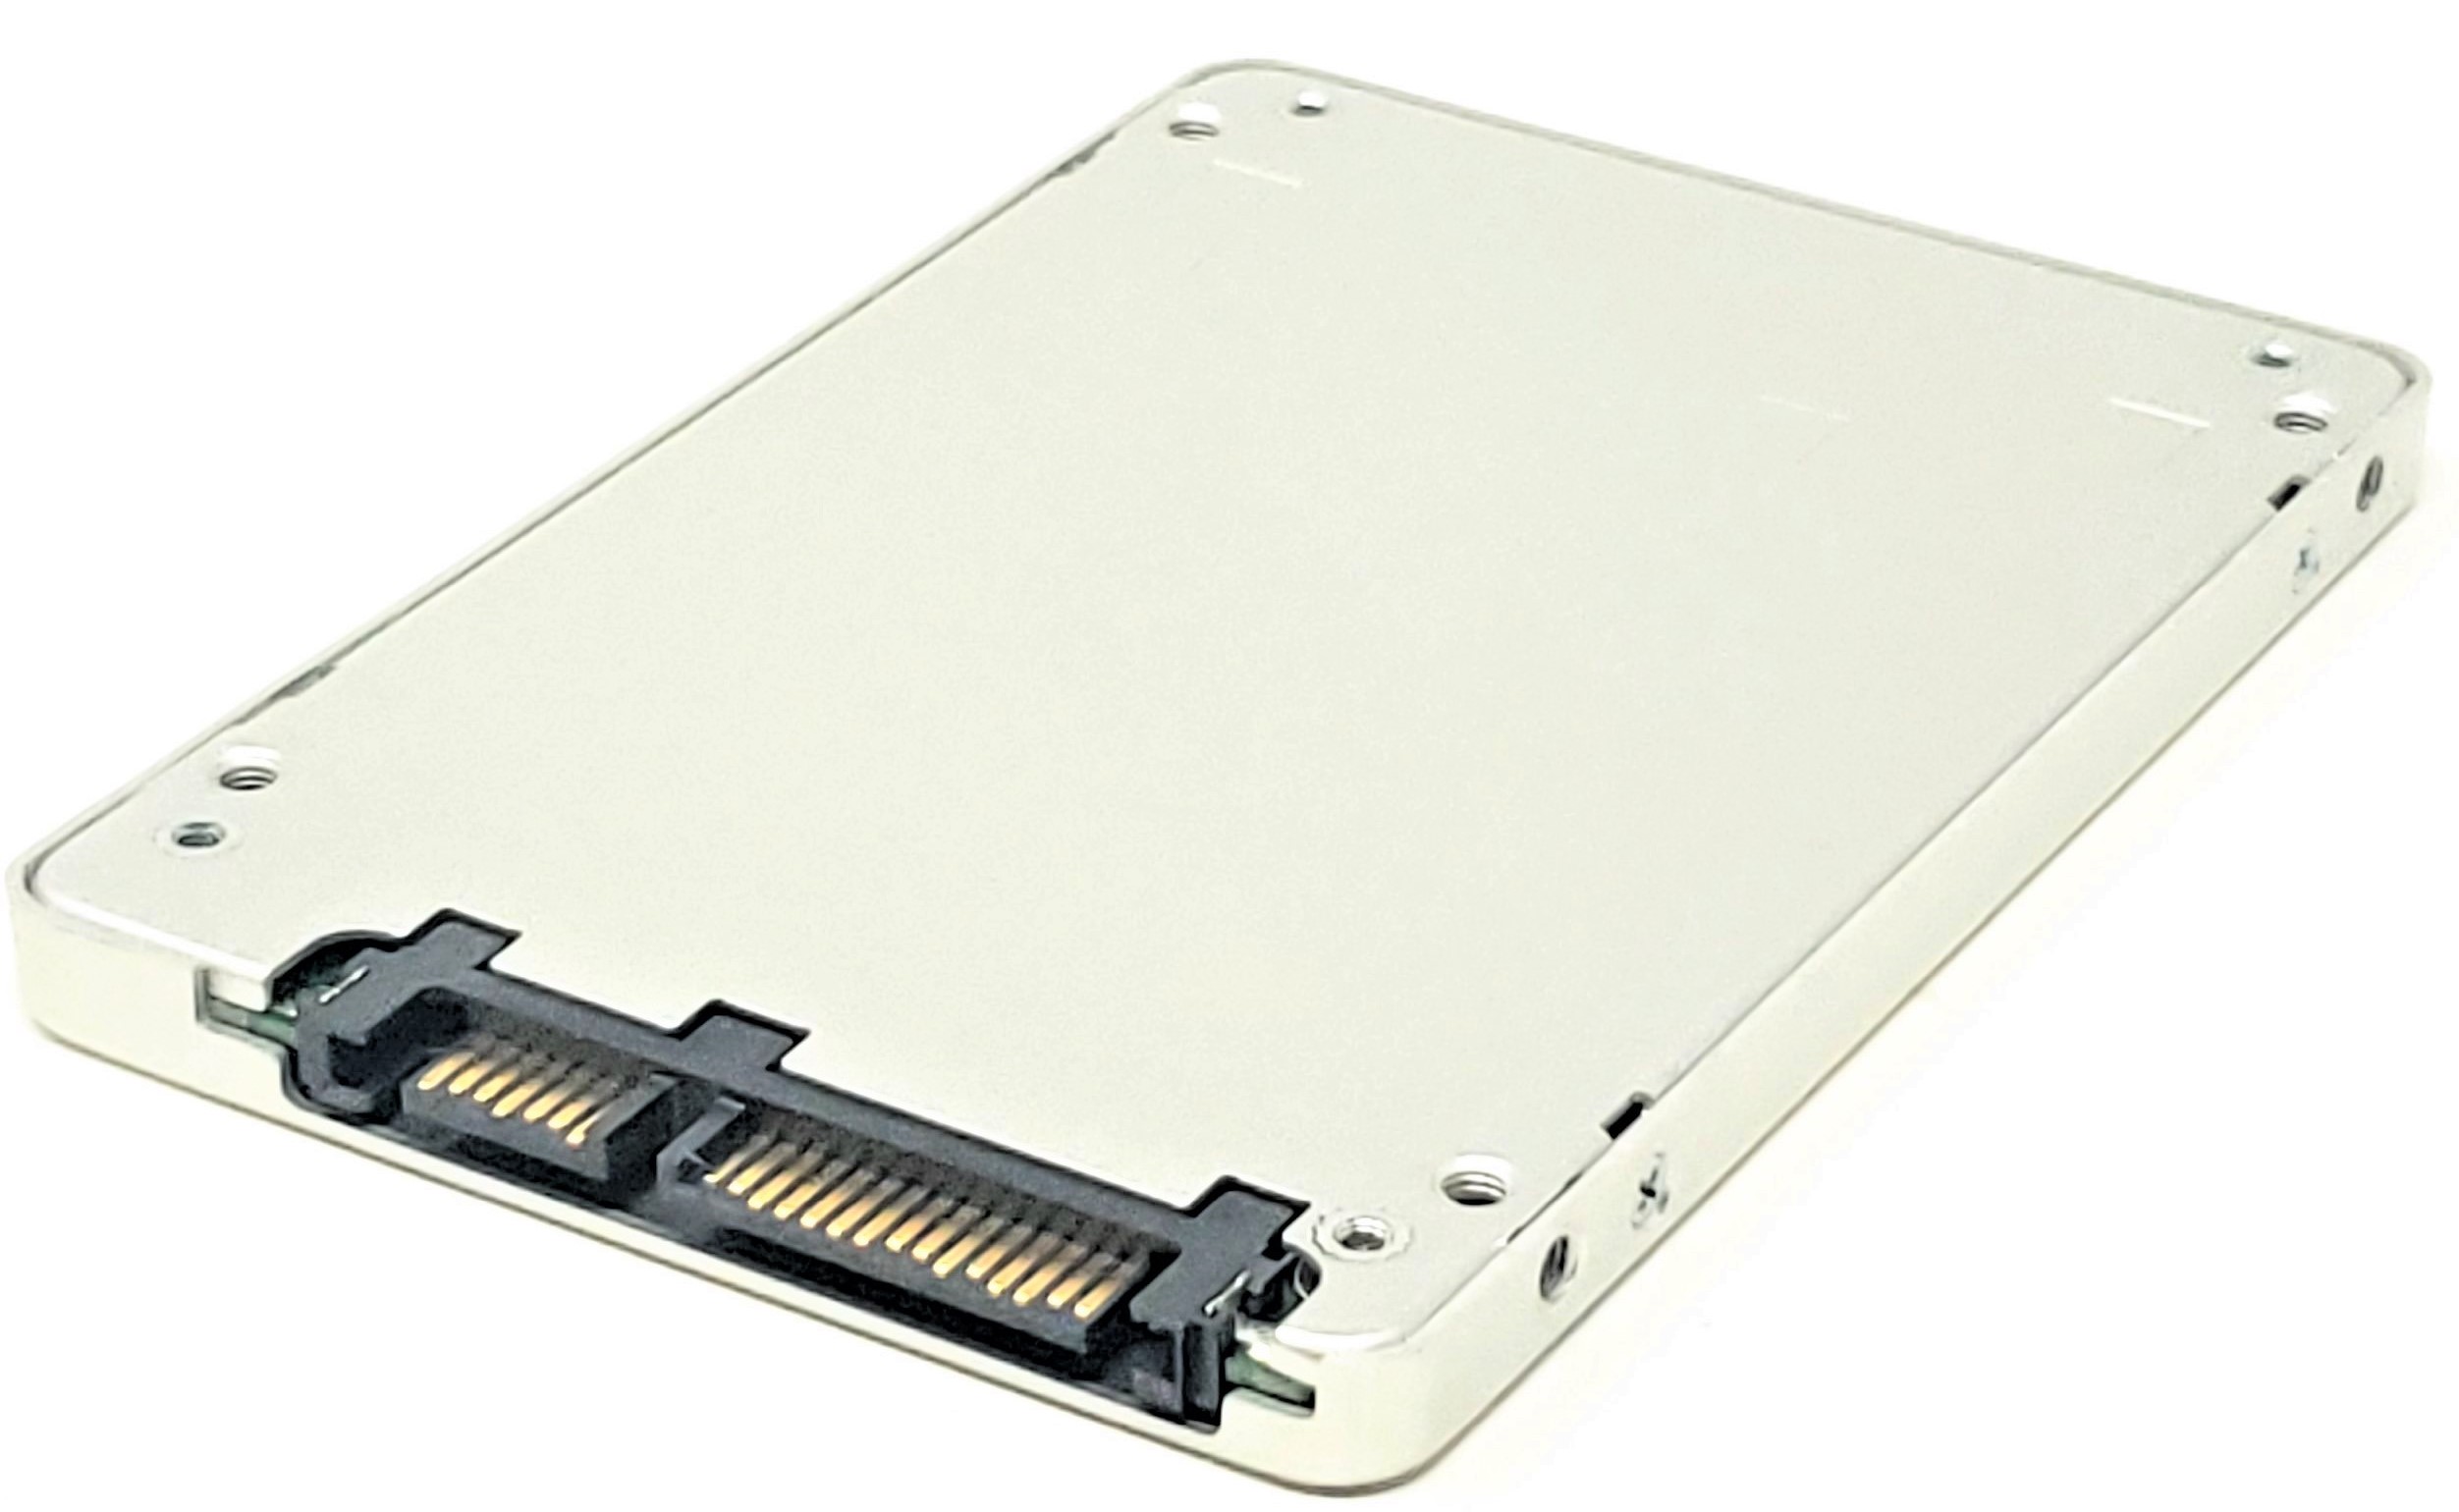 Lite-On CV8-8E256-11 - 256GB M.2 2280 SATA III NGFF Solid State SSD